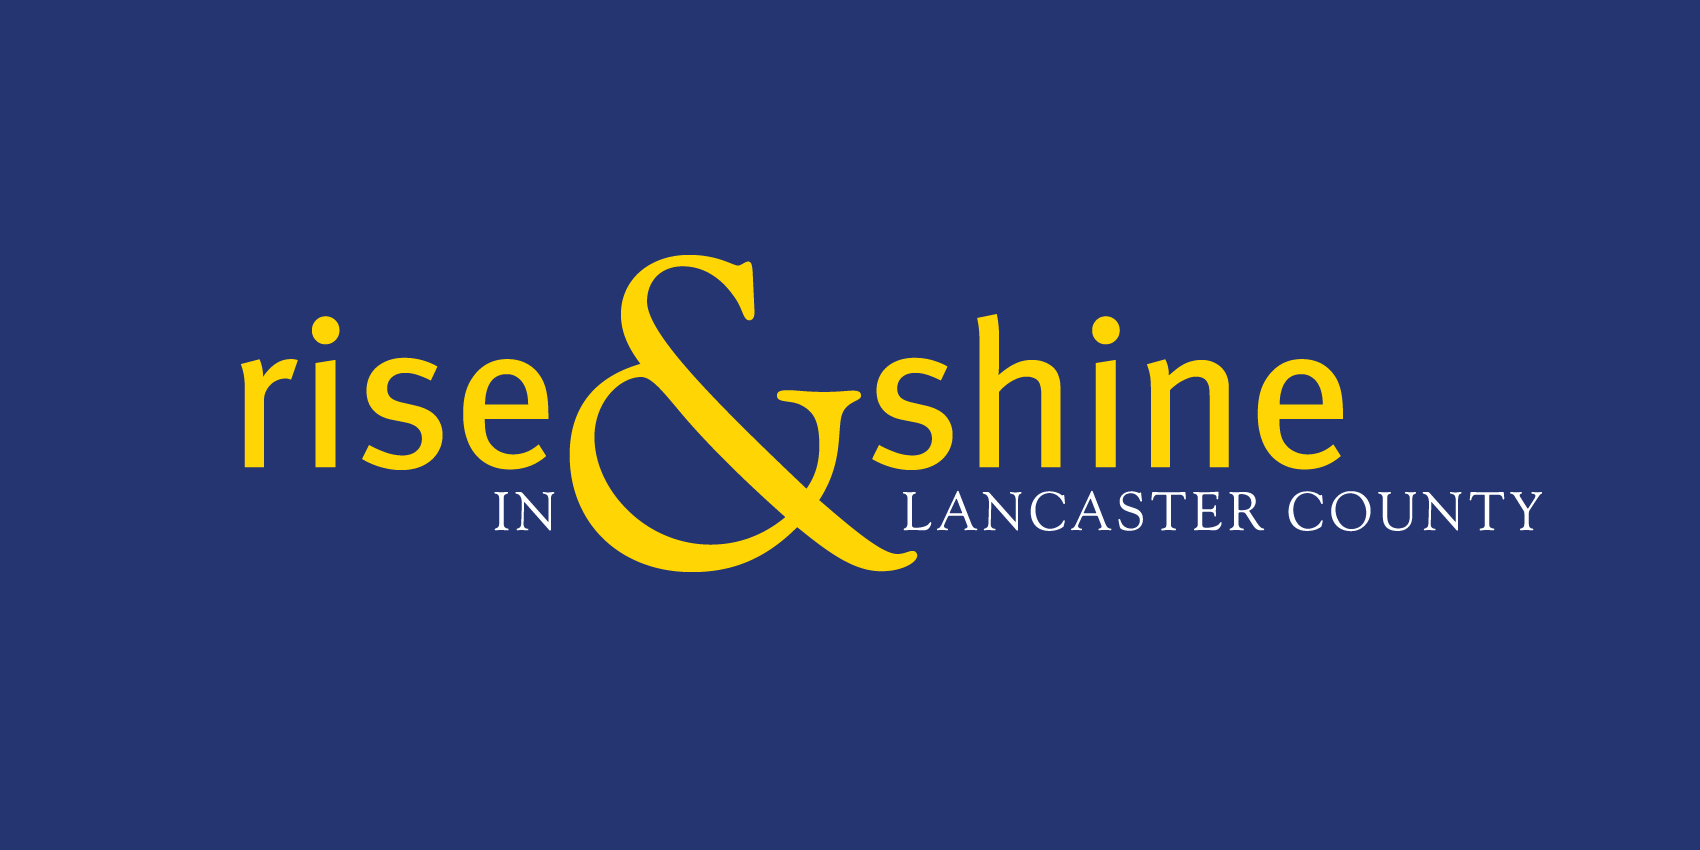 Discover Lancaster Rise & Shine Wordmark 